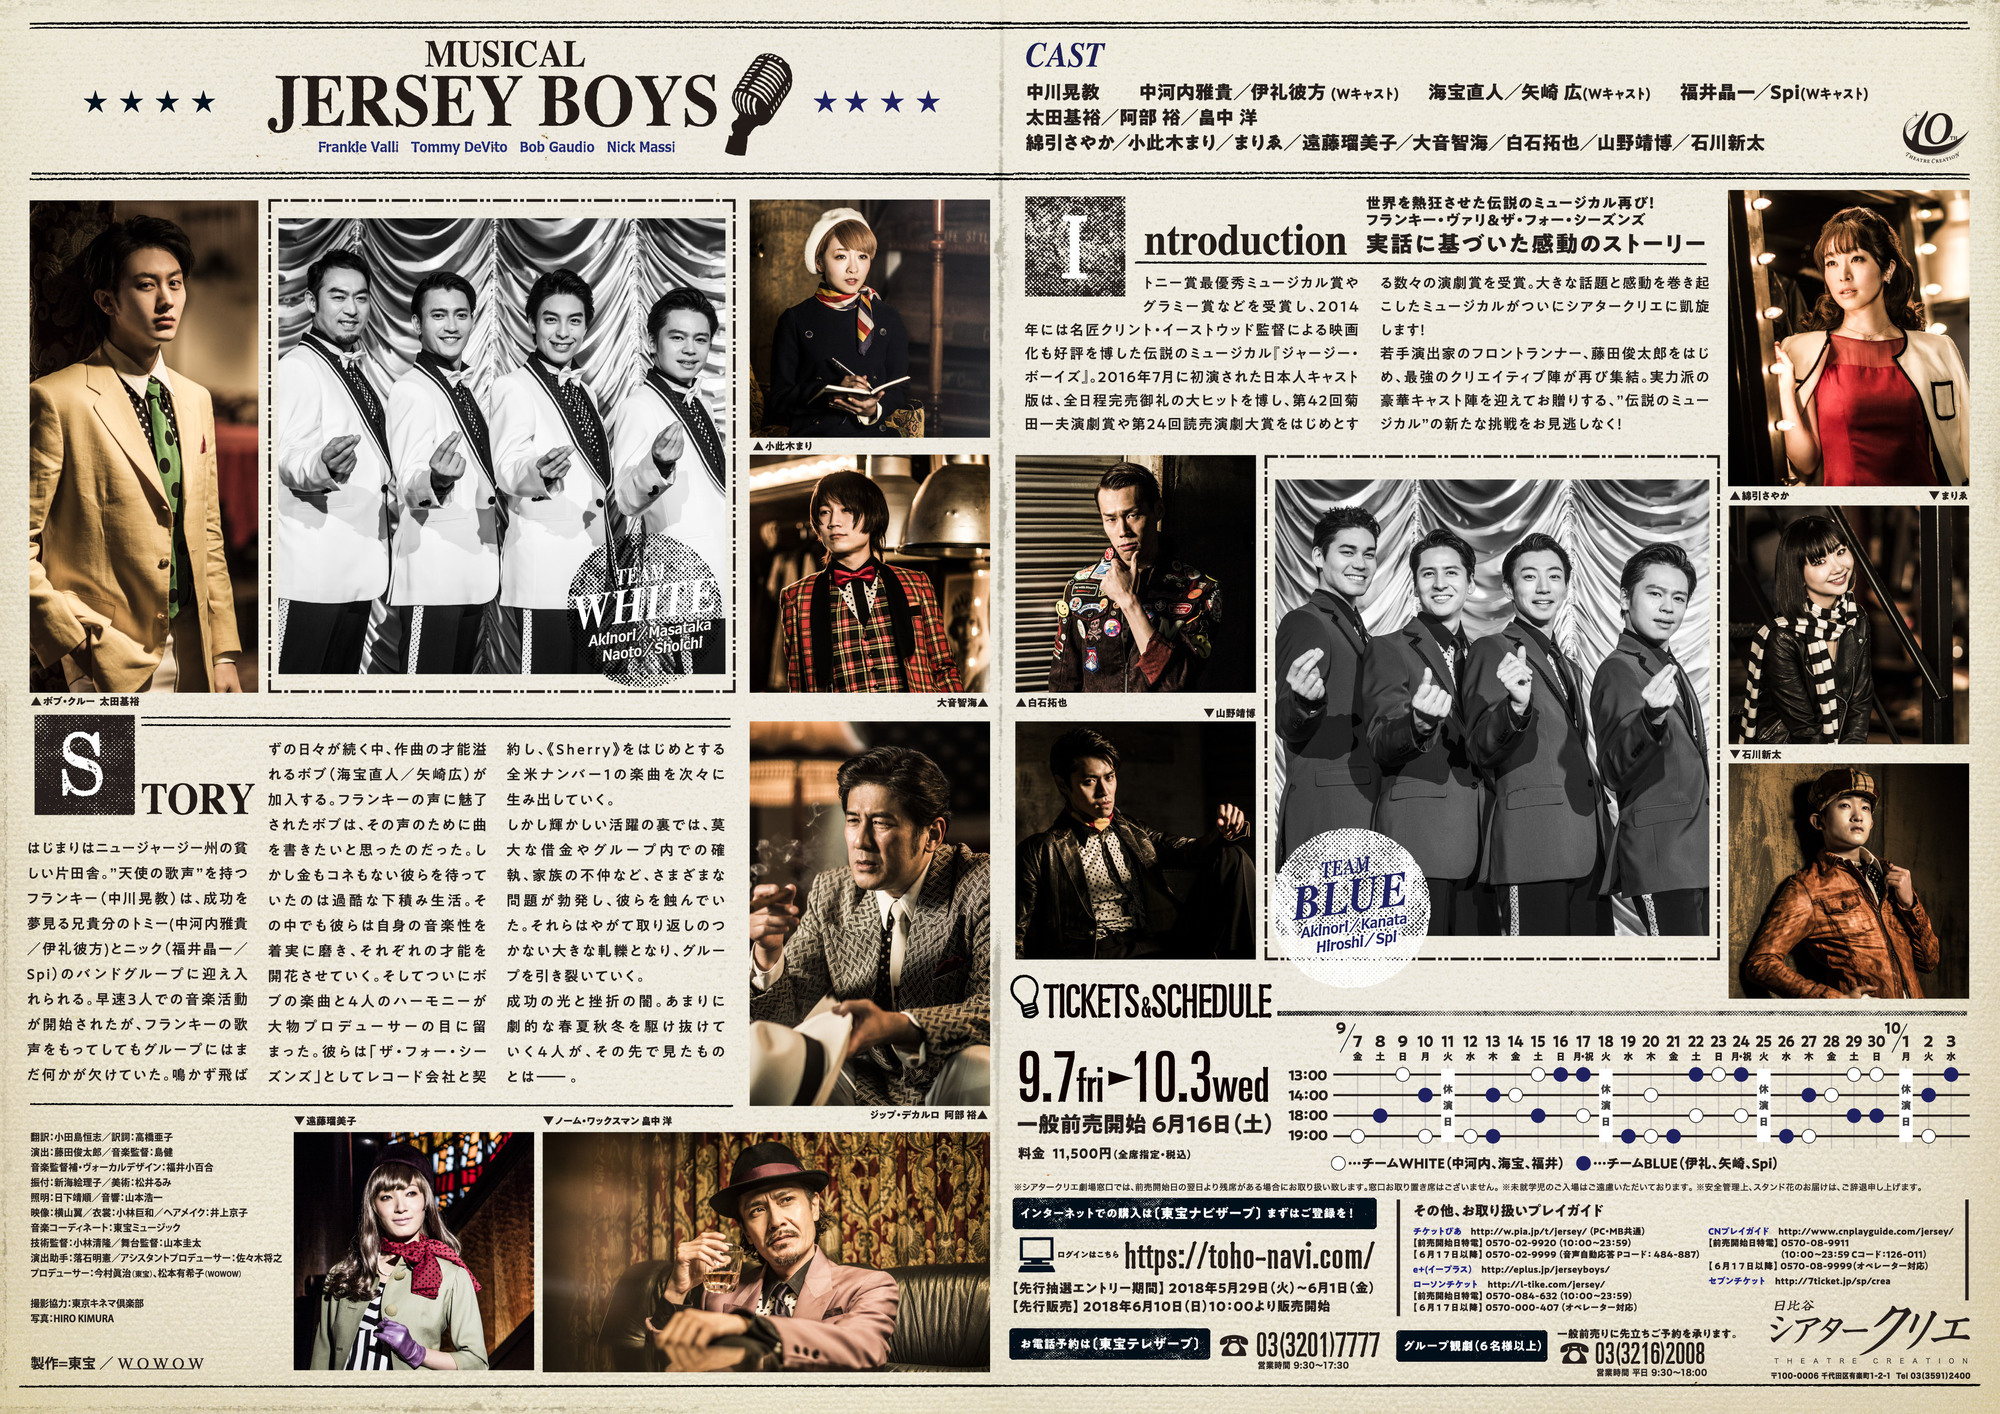 KL-ticket】『ジャージー・ボーイズ』東京・全国公演チケット先行 | 伊礼彼方 Official Site